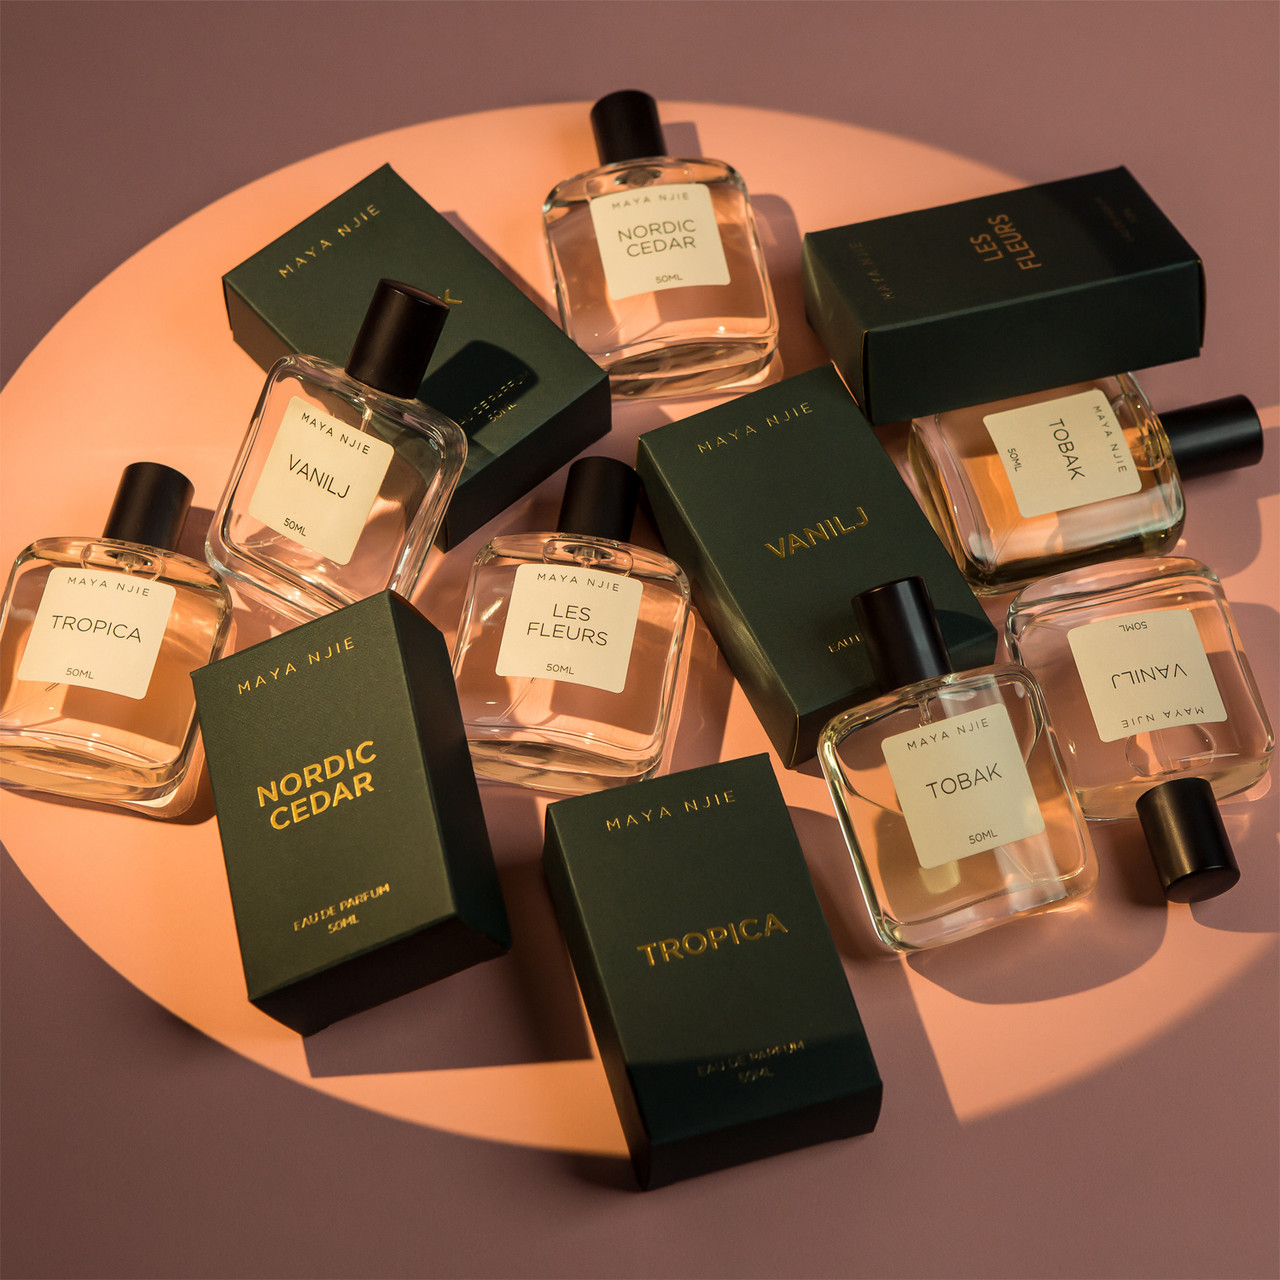 Nordic Cedar Eau De Parfum, Maya Njie, tomfoolery